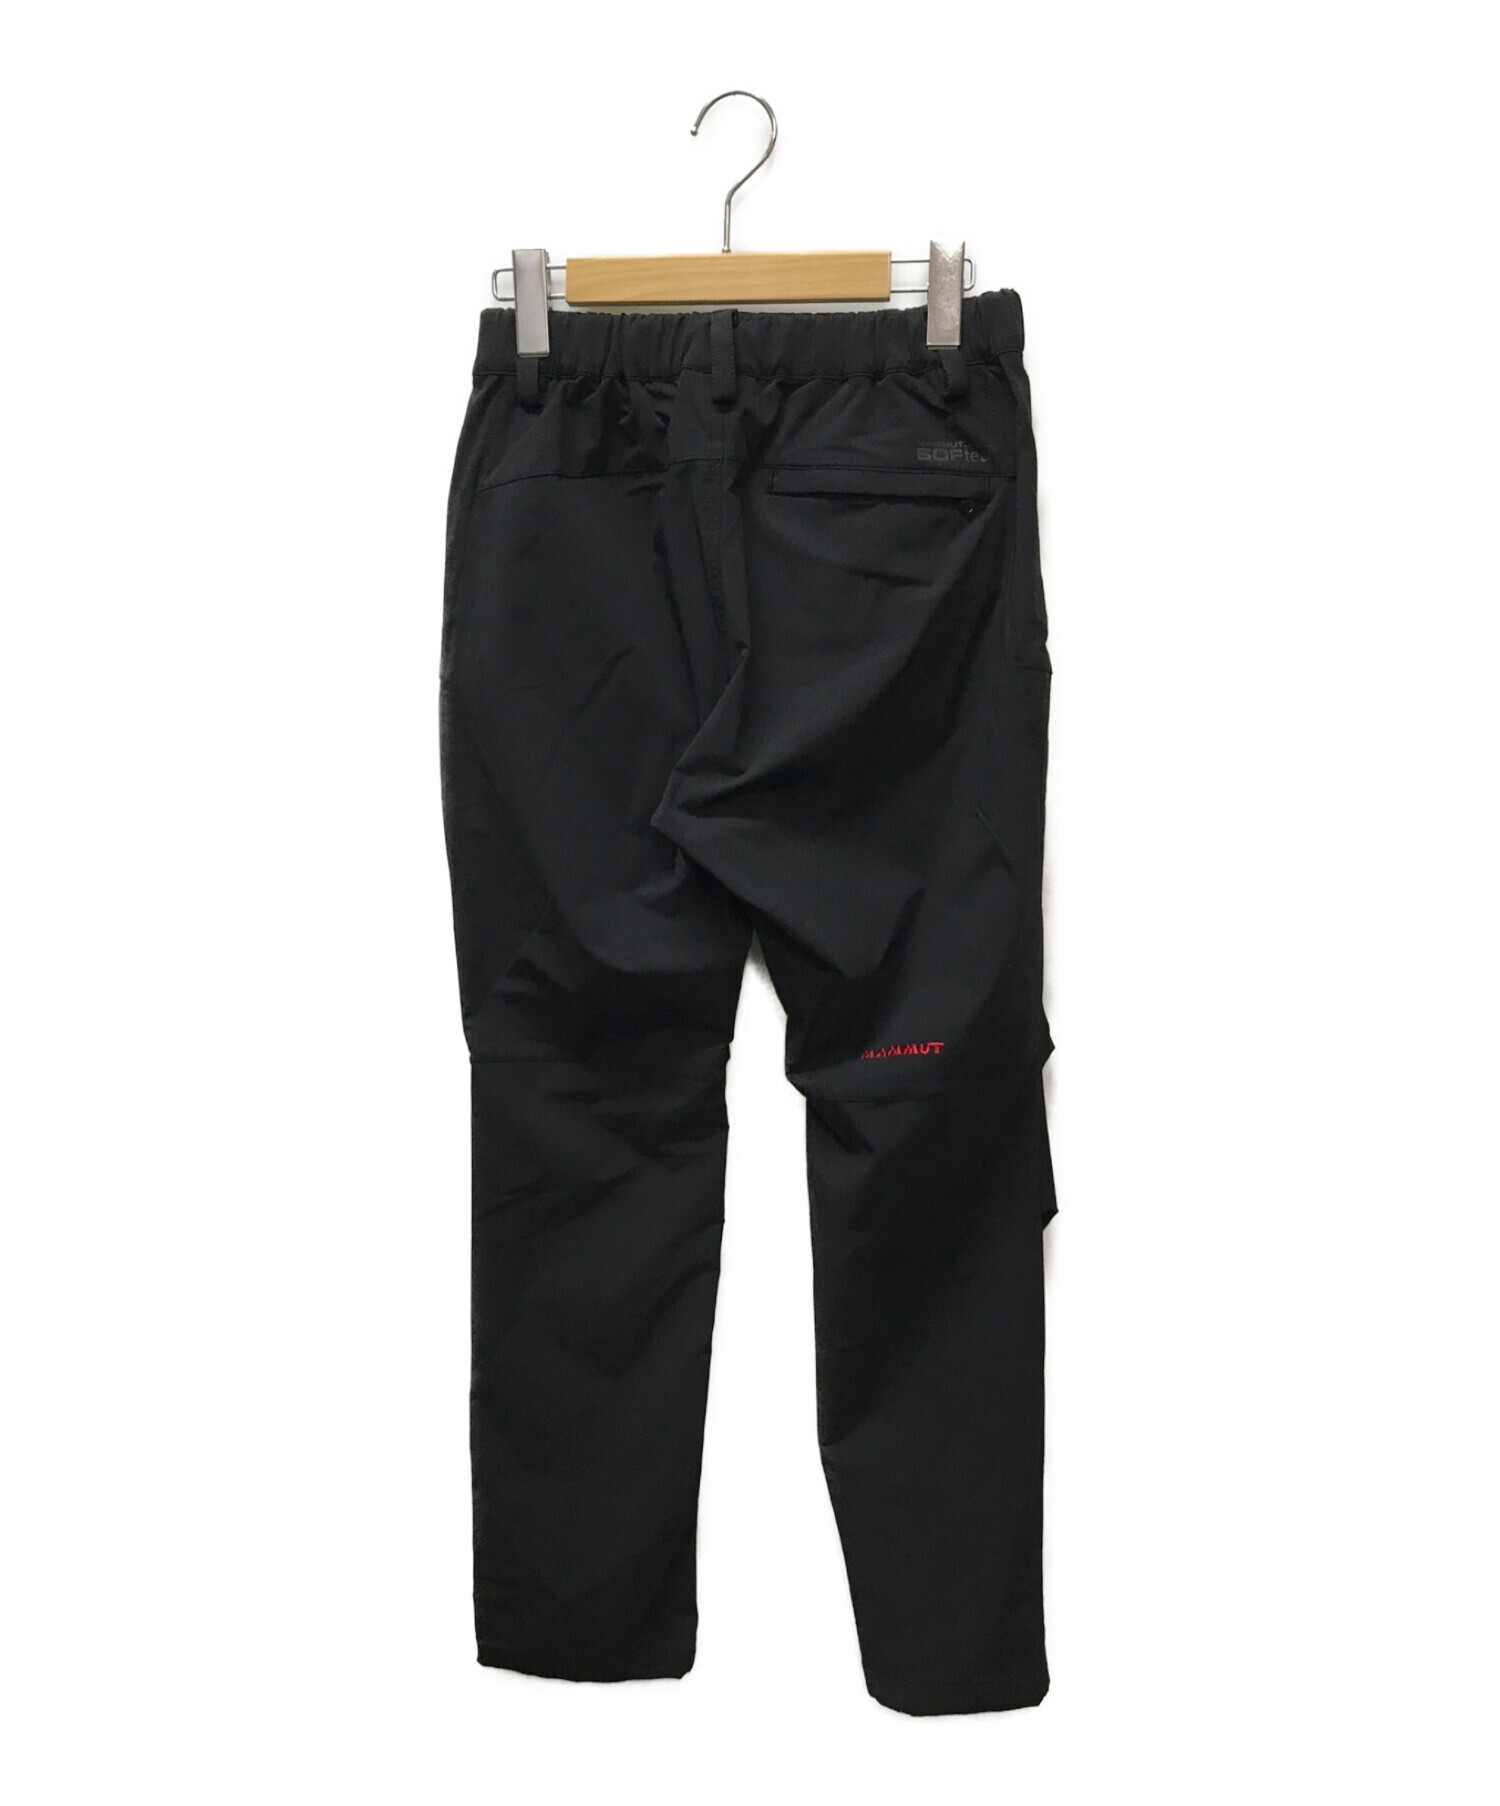 MAMMUT (マムート) ソフテック トレッカーズパンツ/SOFtech TREKKERS Pants Men ブラック サイズ:XS